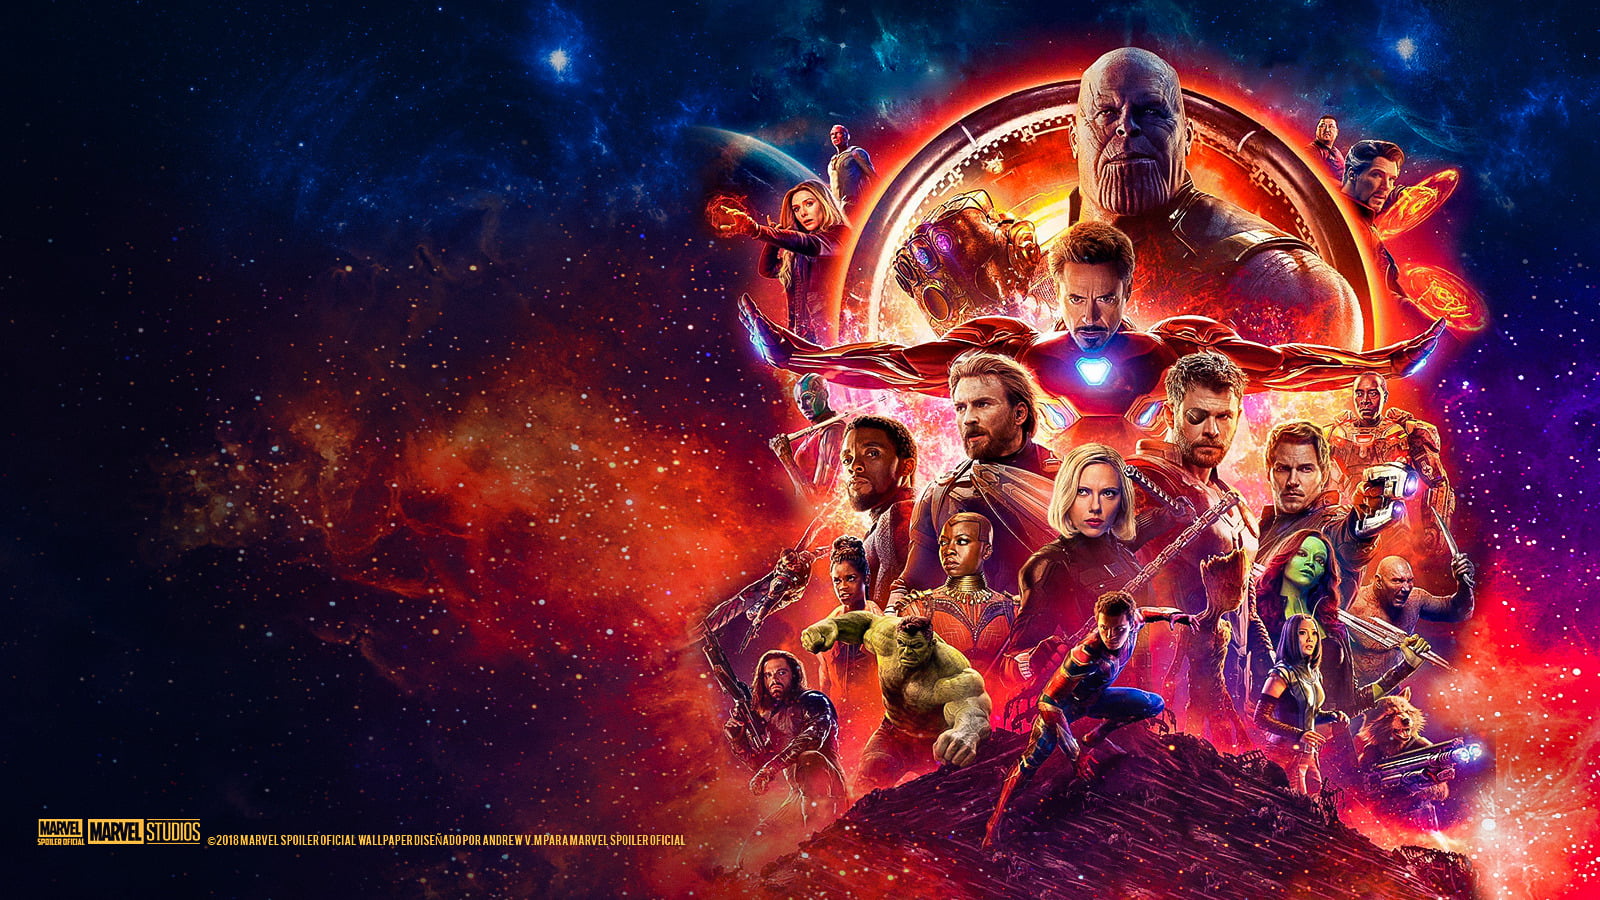 avenger infinity war download movie